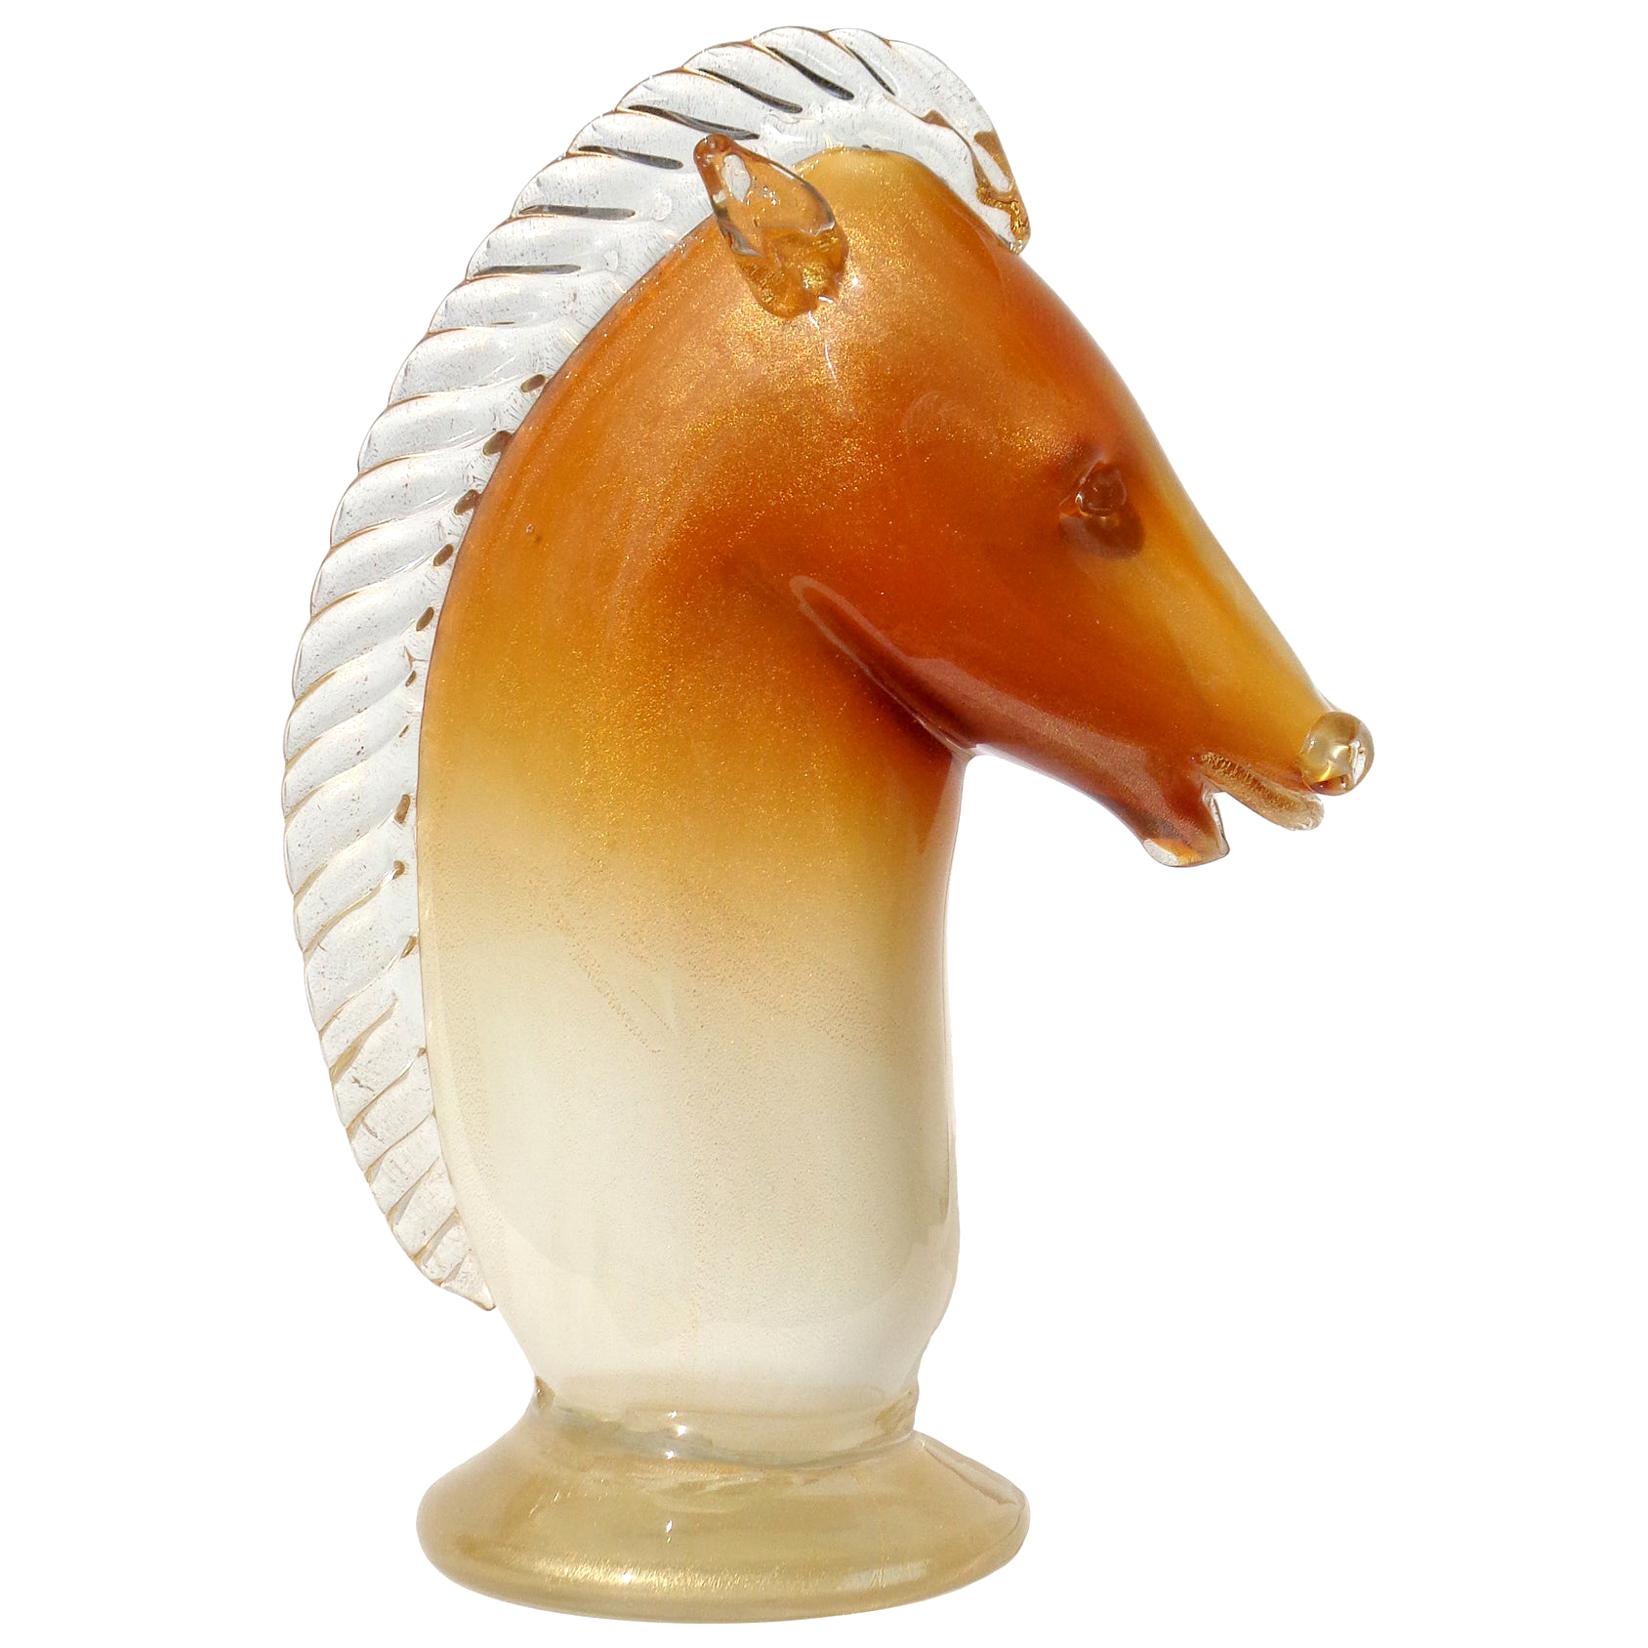 Murano Orange Ombre Fade Gold Italian Art Glass Horse Head Figure Sculpture